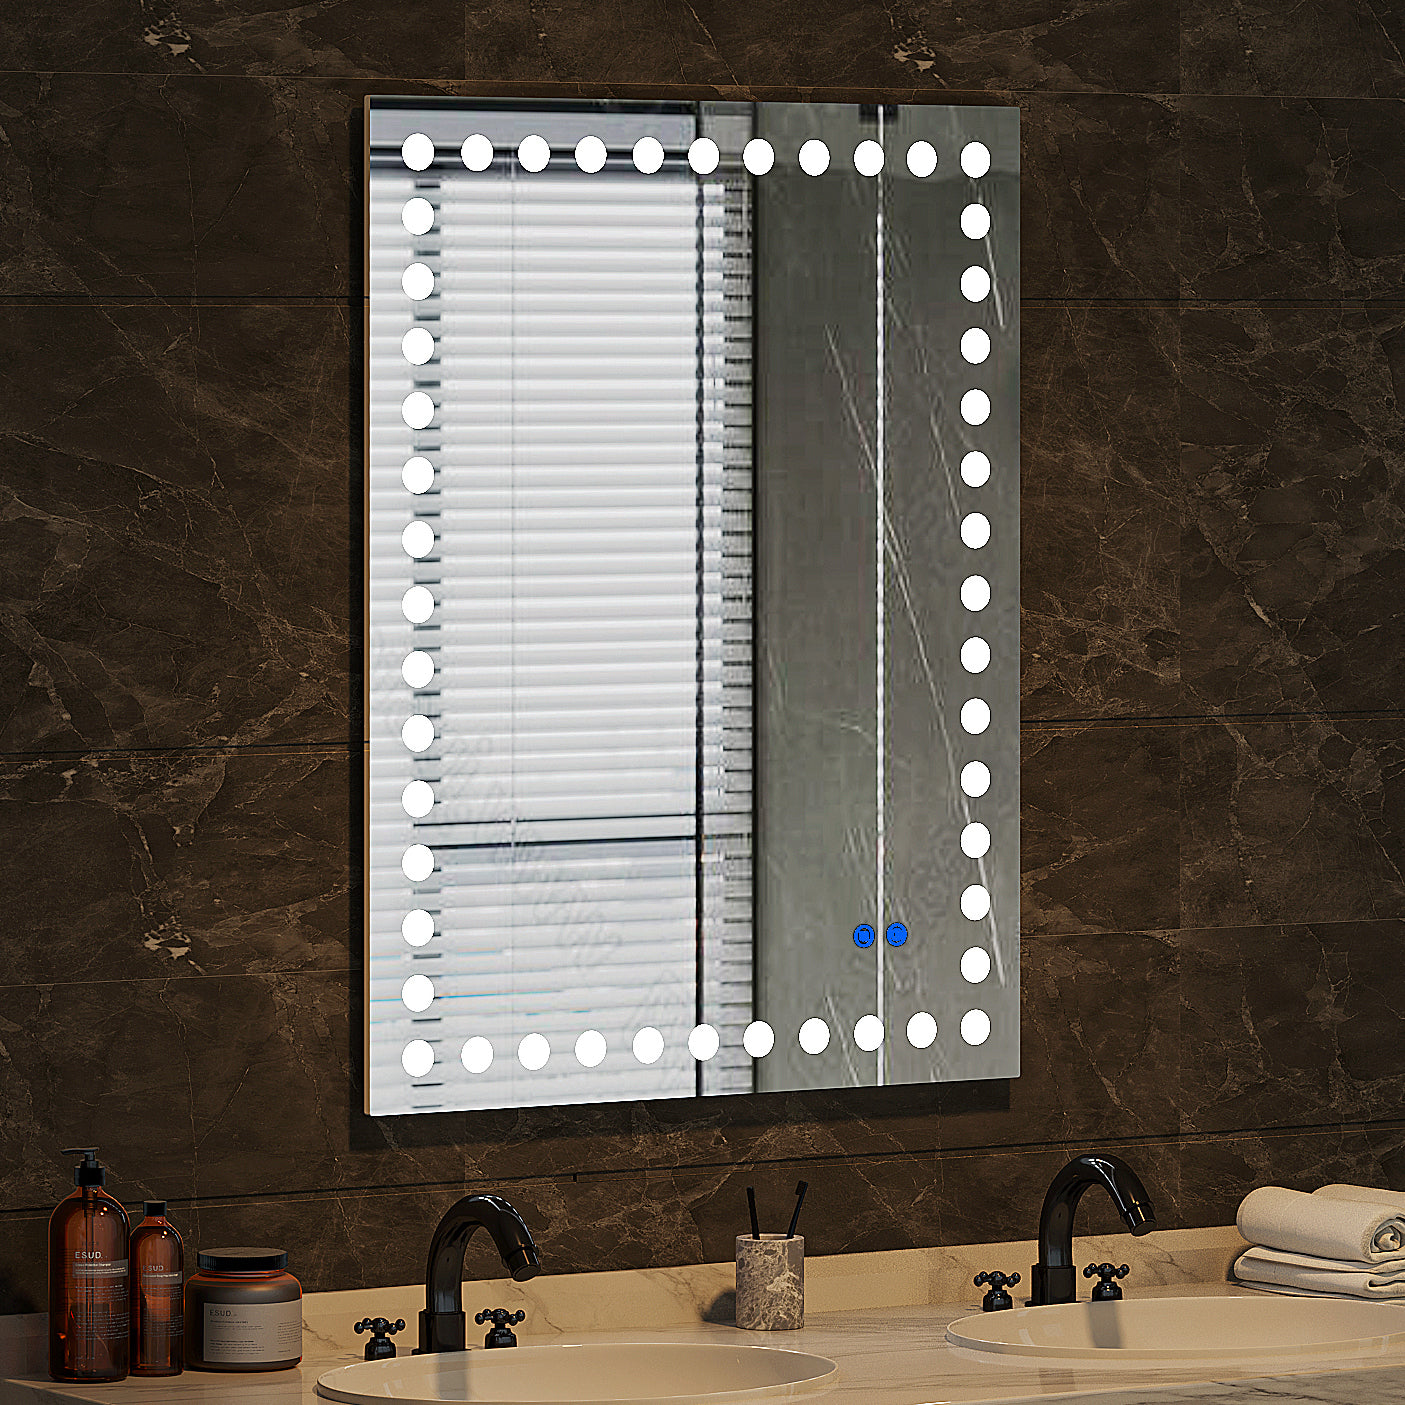 36 28 Inch Led Lit Bathroom Mirror, Wall Mounted Anti white-glass